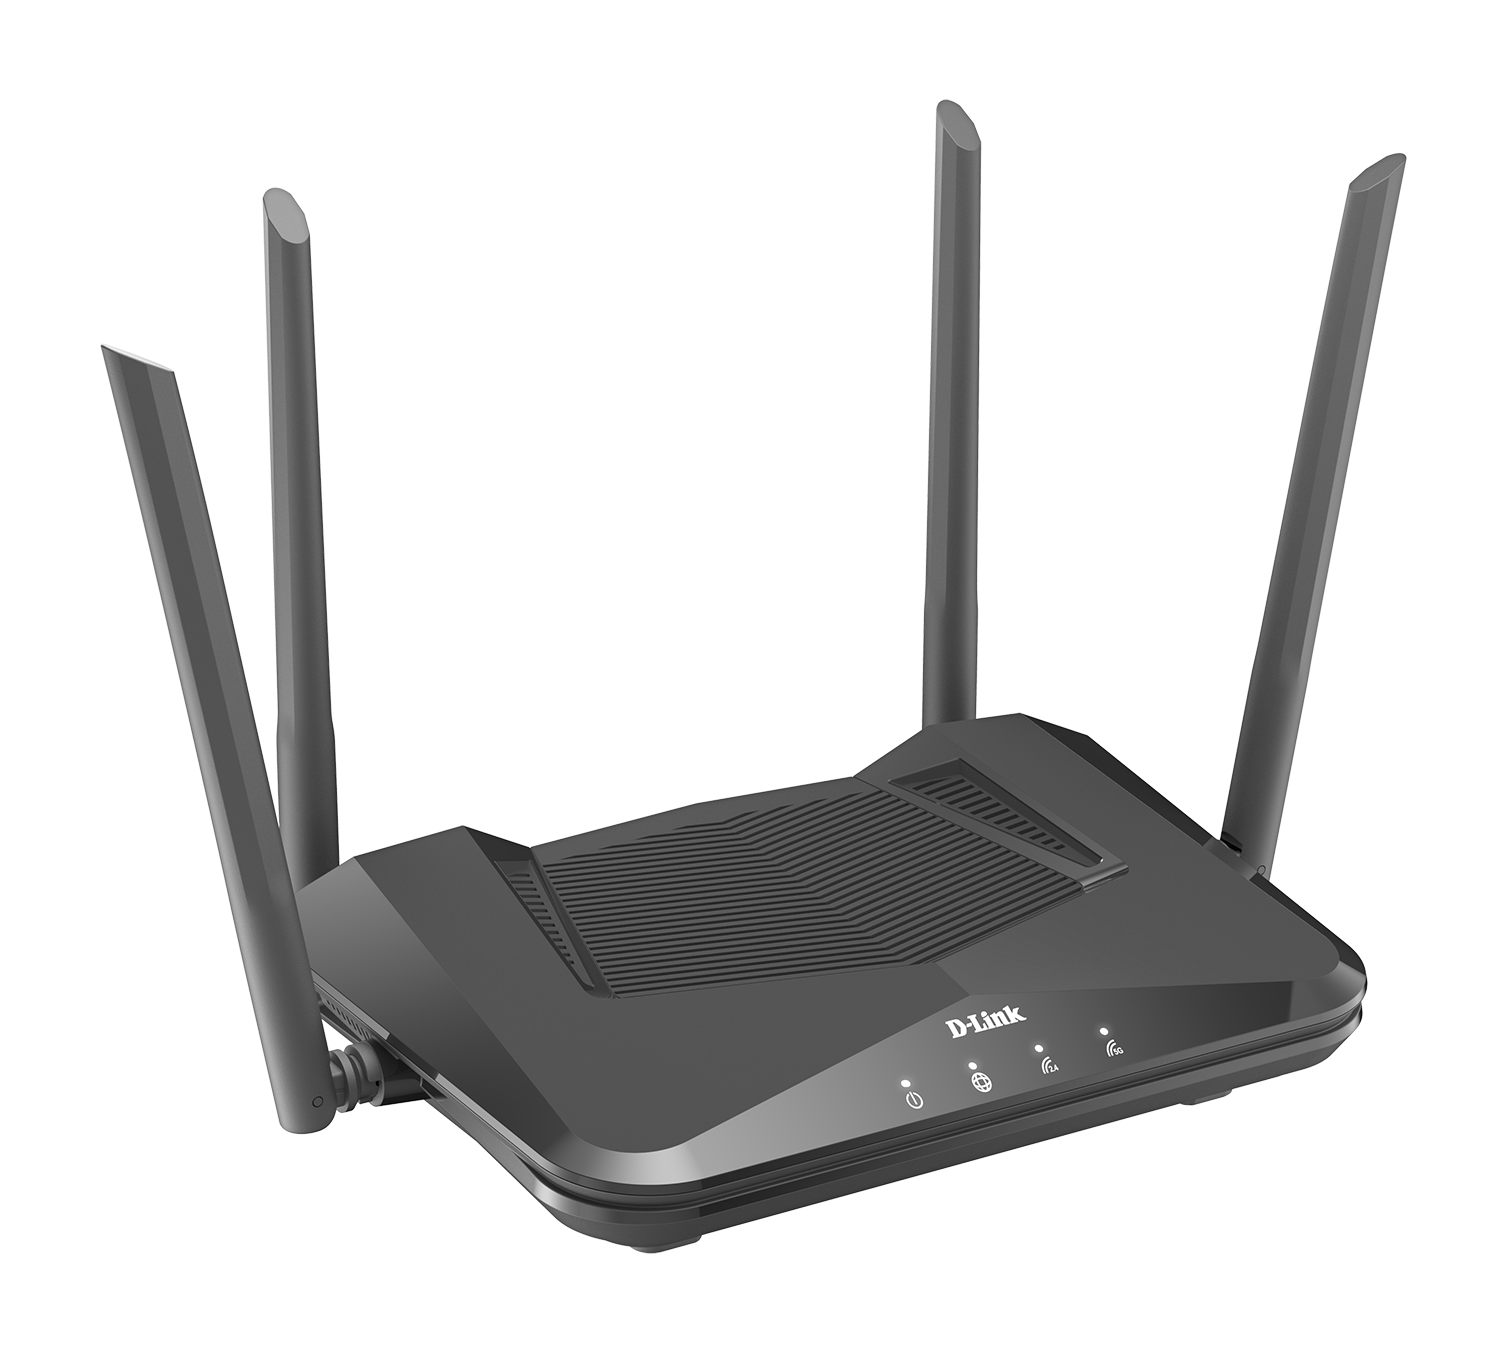 DIR-X1560 AX1500 Wi-Fi 6 Router - Right